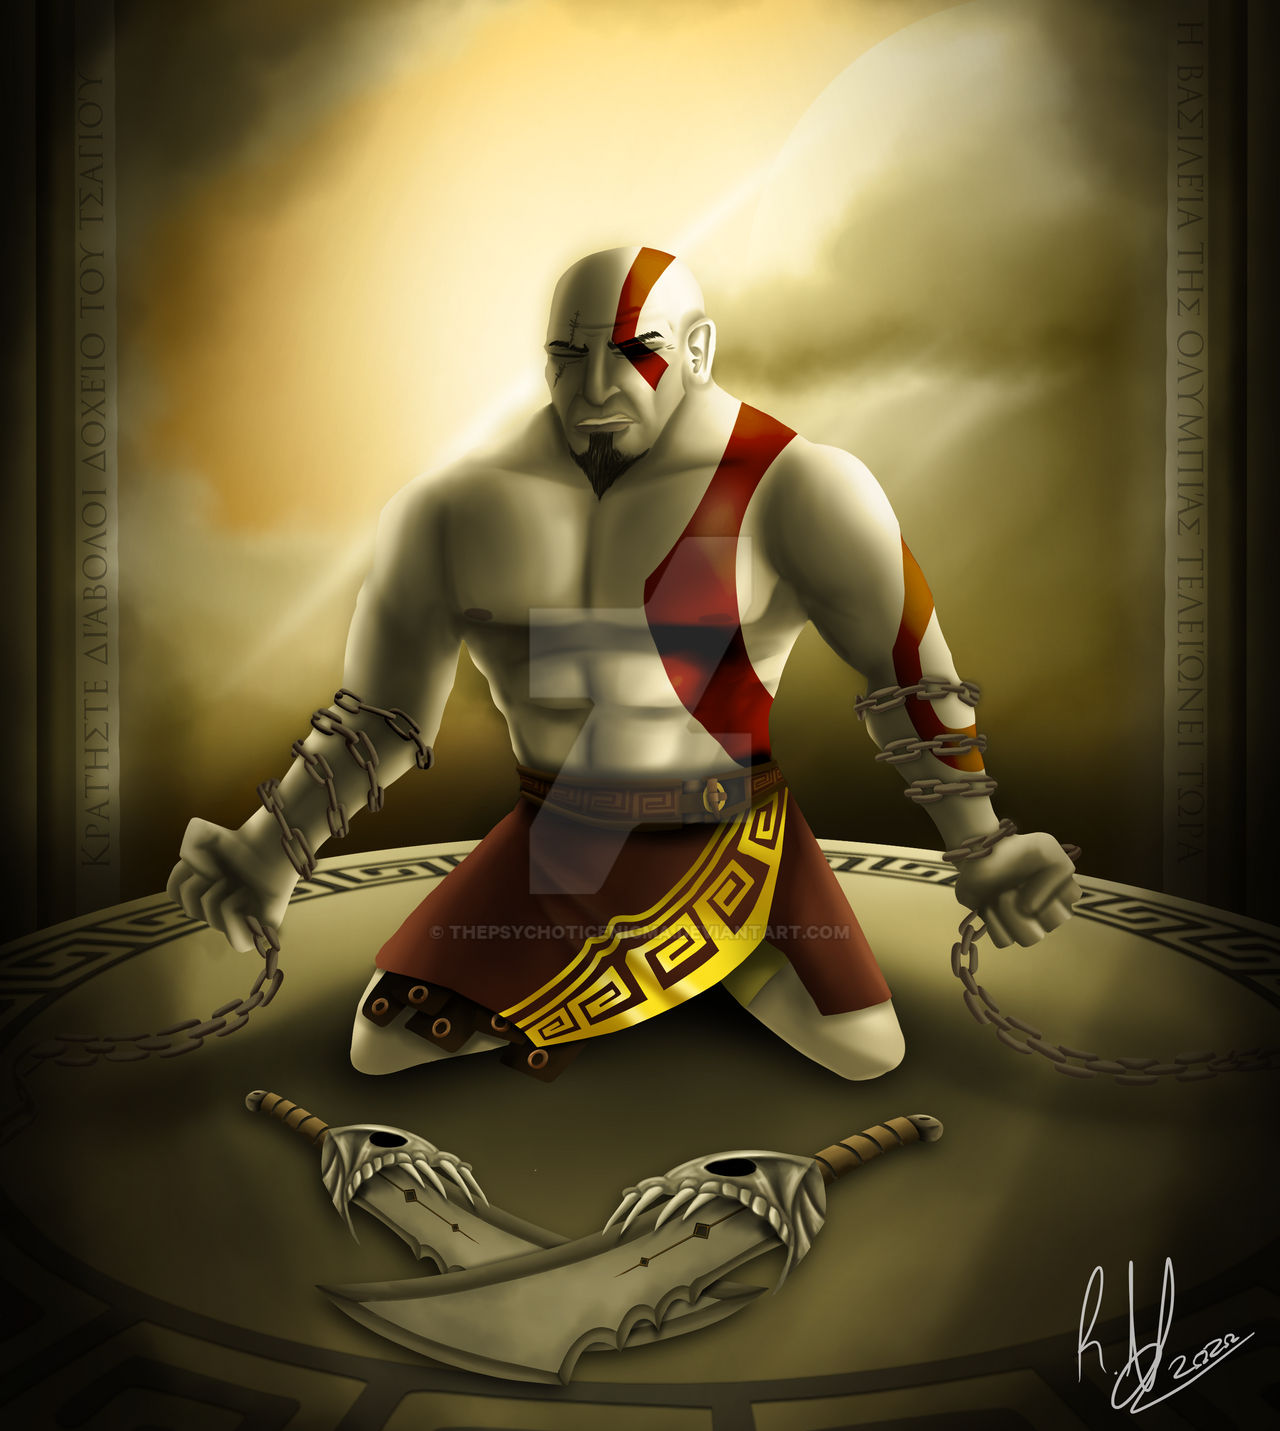 God of War: Ascension Kratos Wallpaper by xKirbz on DeviantArt